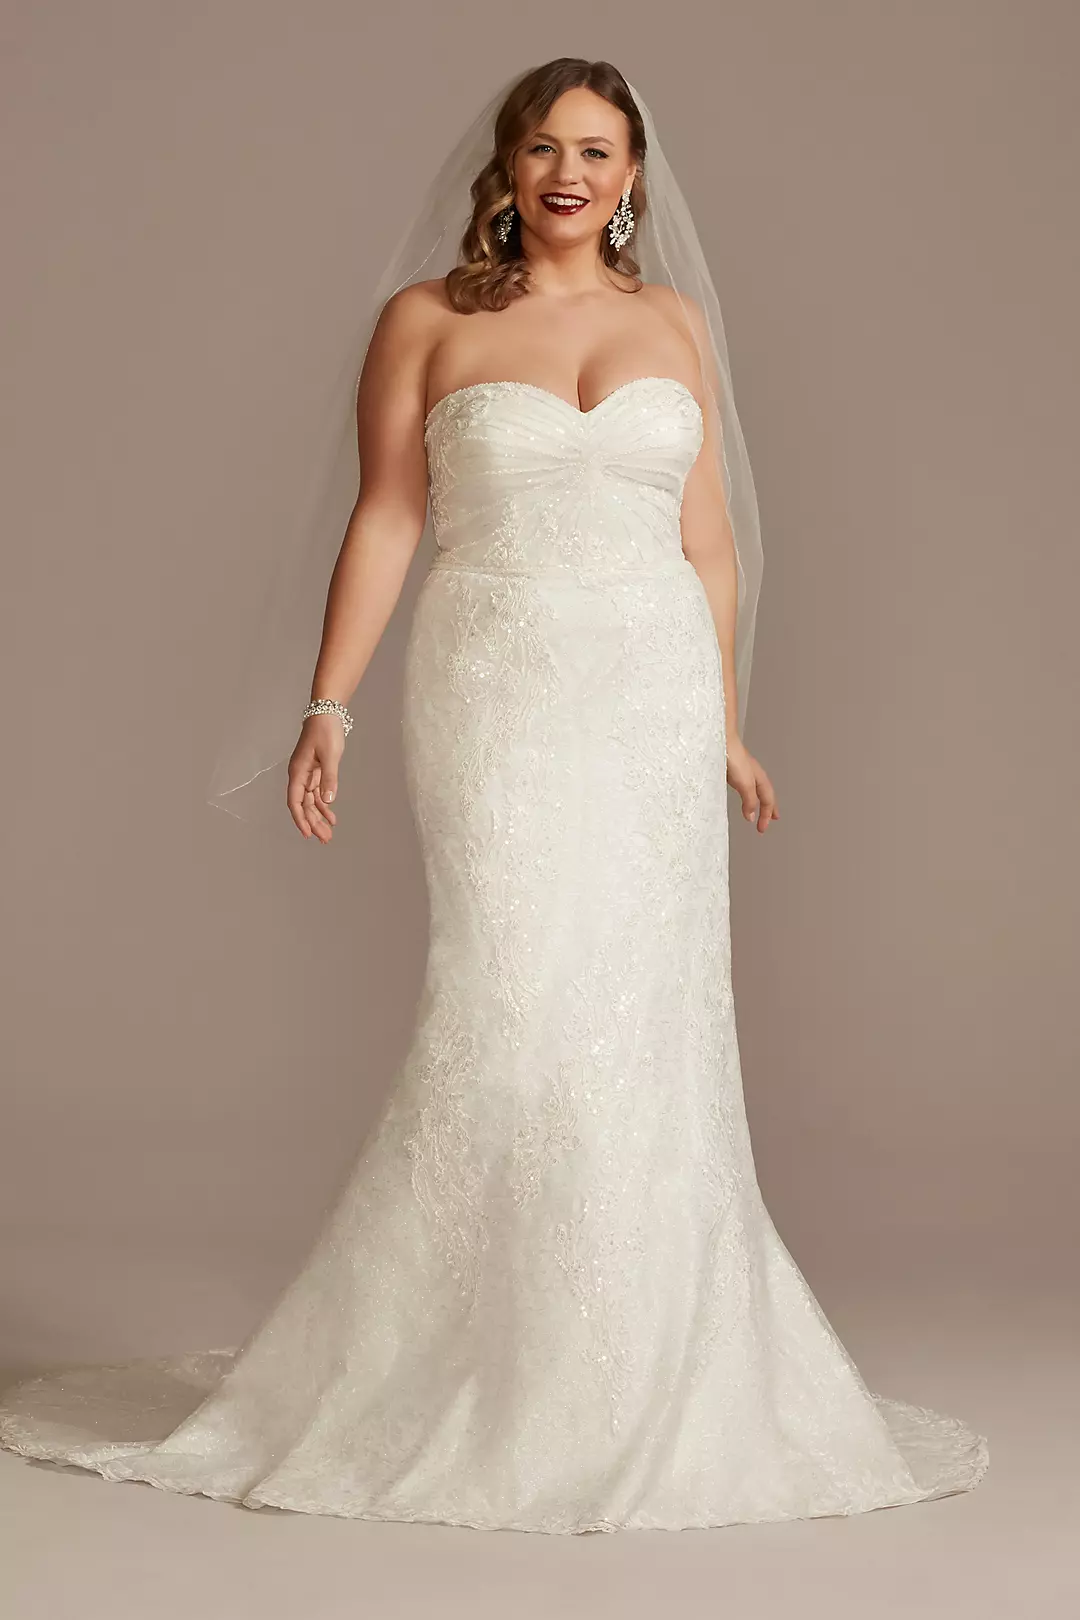 Shirred Lace Strapless Wedding Dress Image